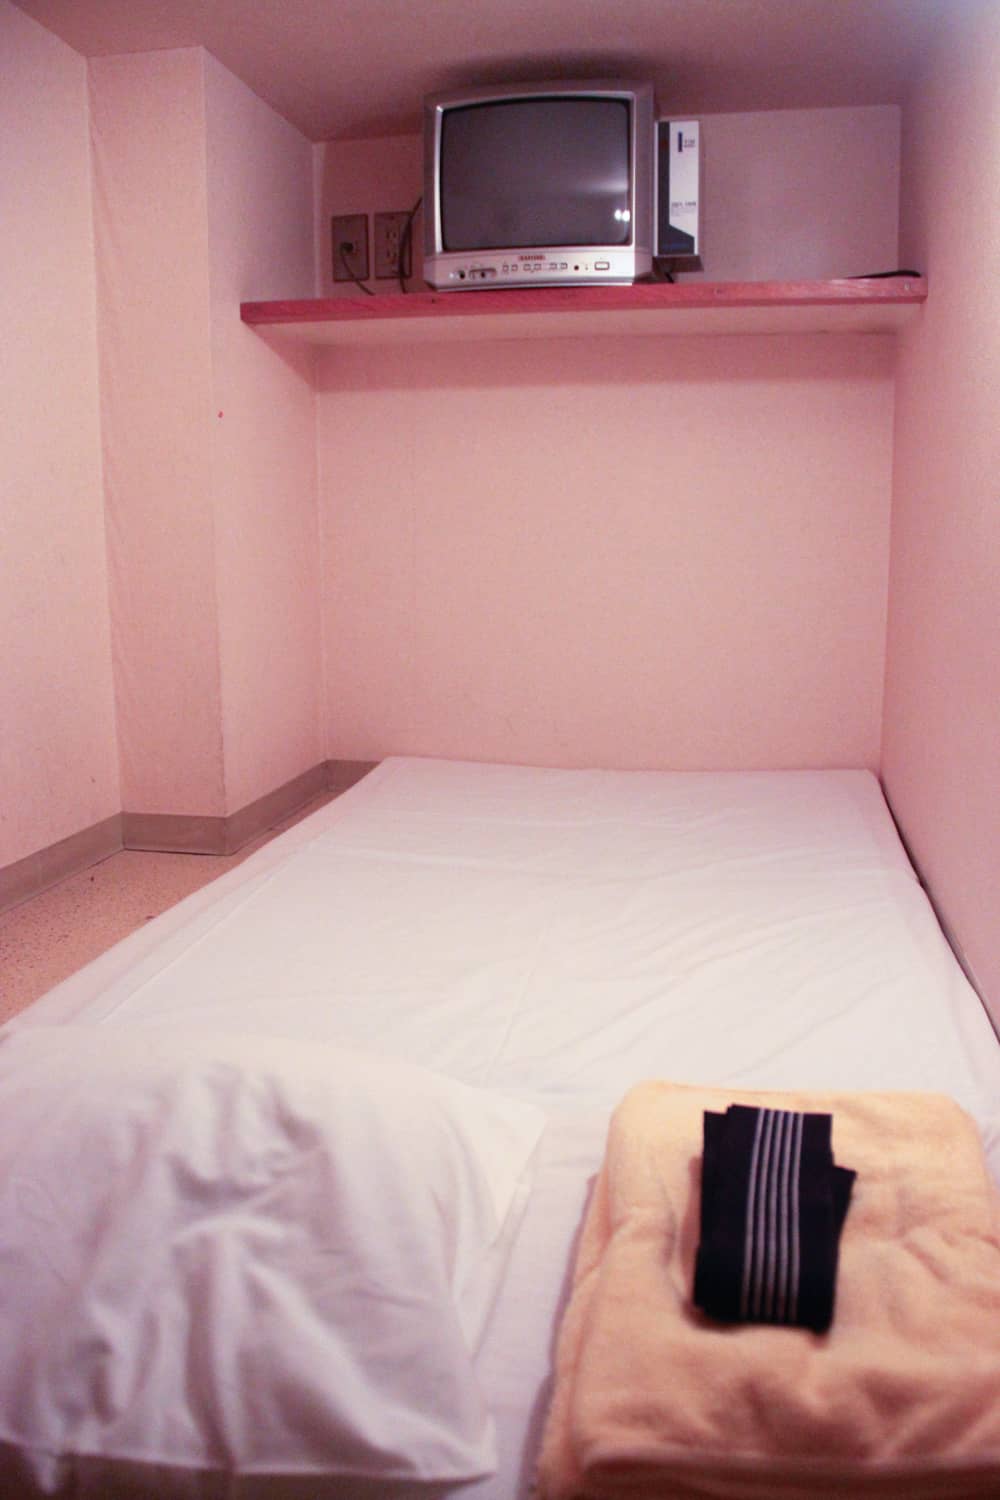 What does a capsule bed look like in a Capsule Hotel in Japan?